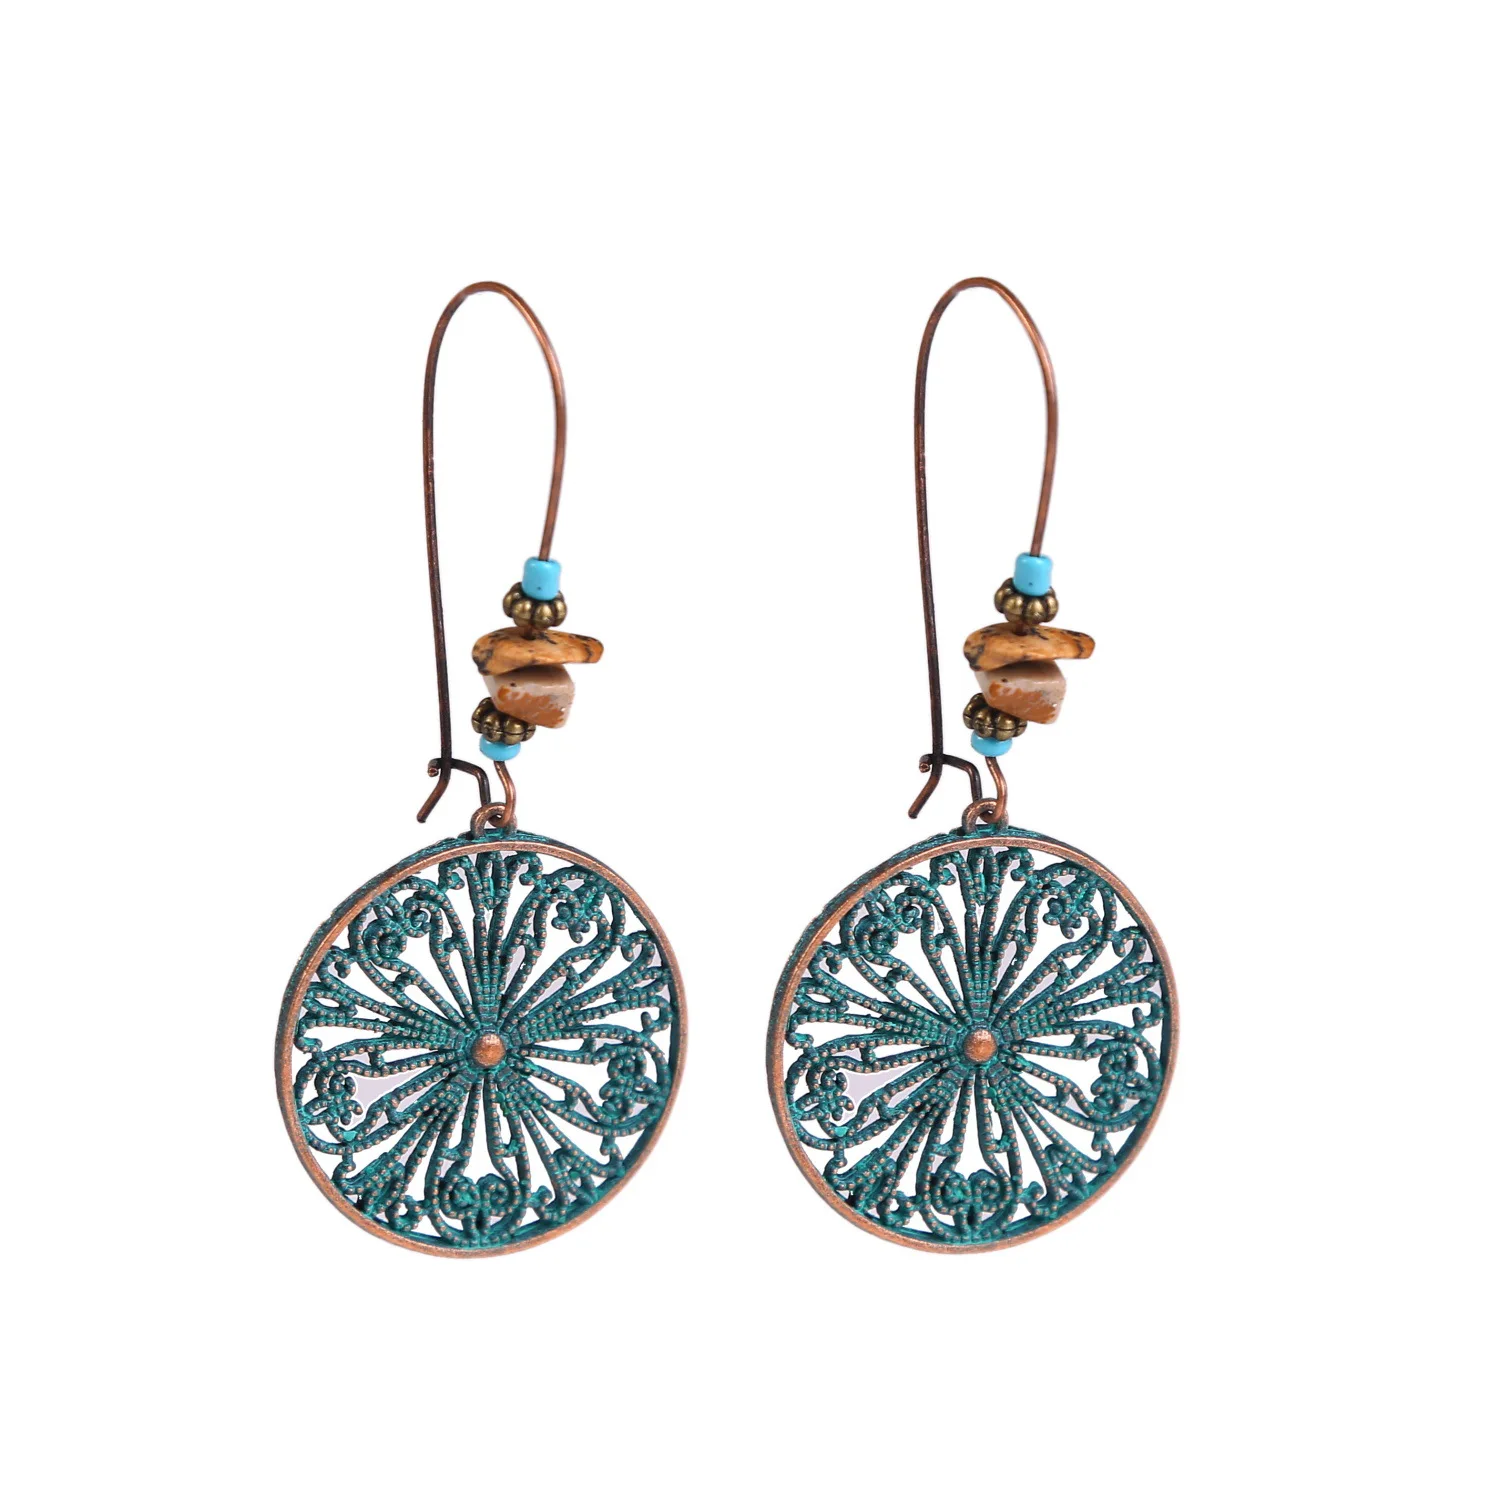 Silver and turquoise earrings  Boho gypsy ethnic boho jewelry